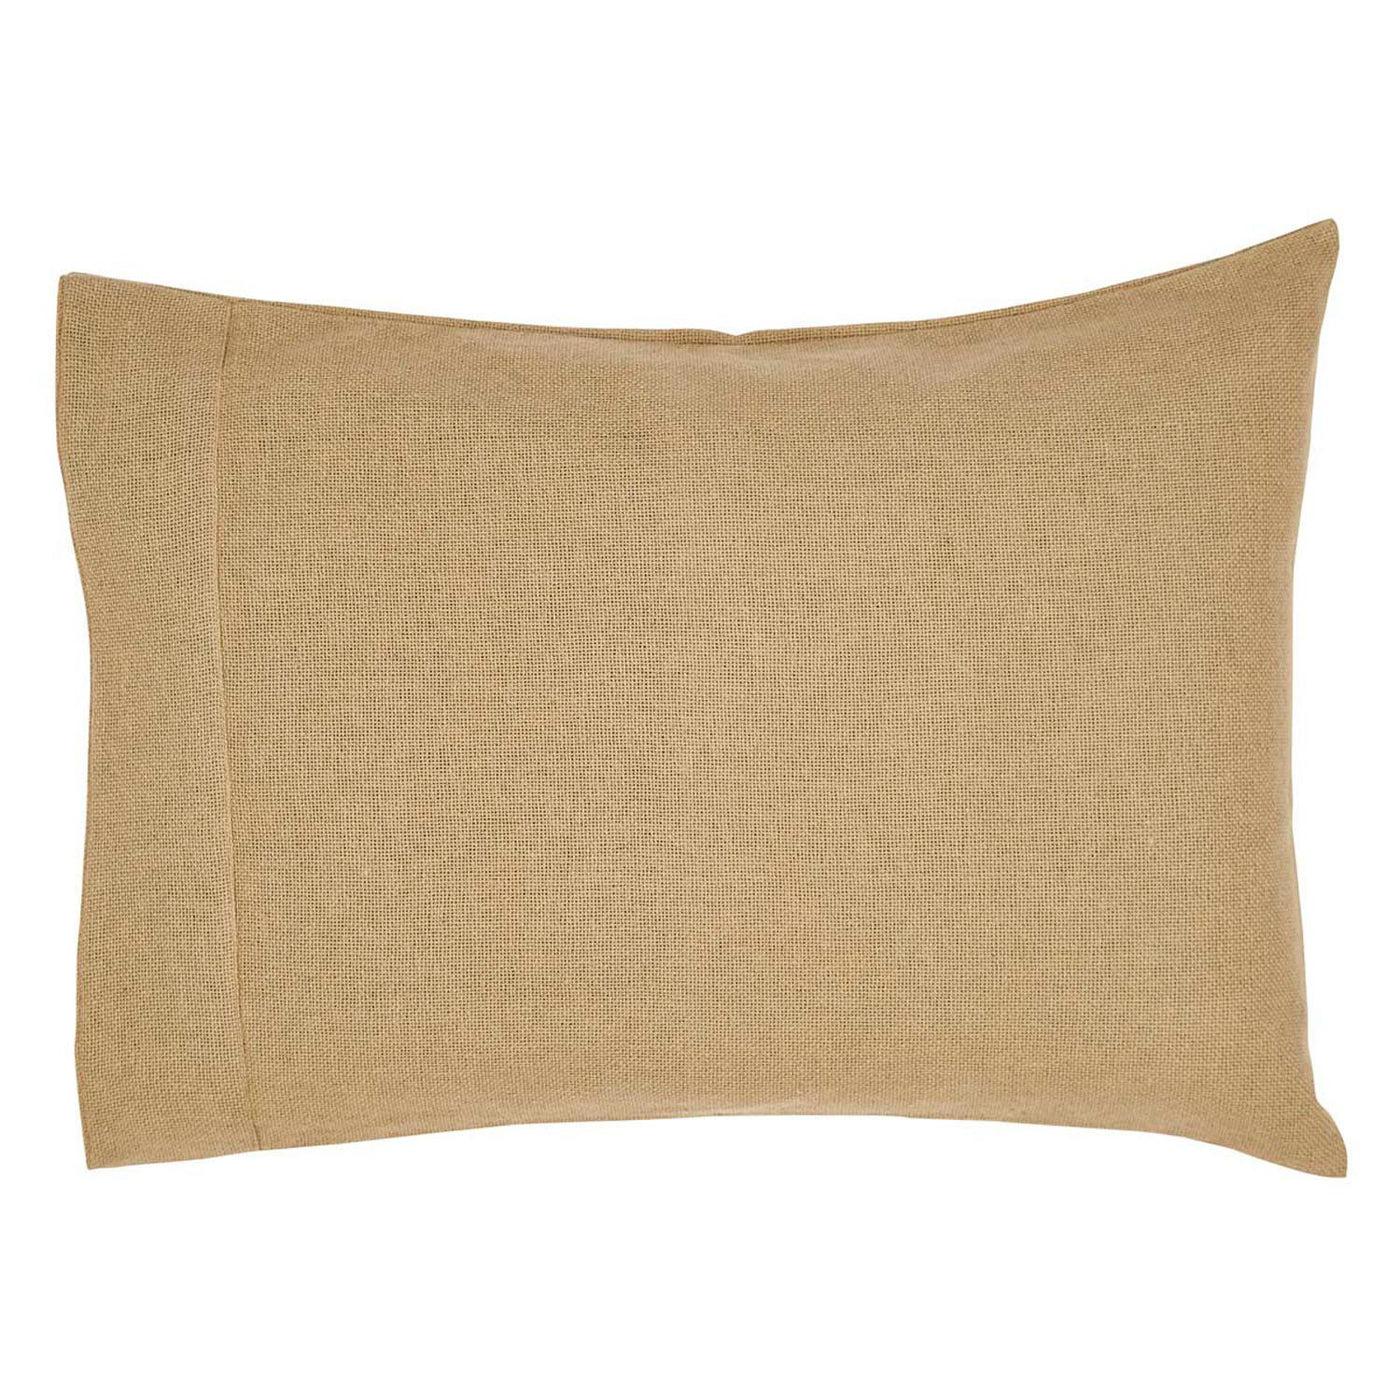 Athol Standard Pillow Case - Natural - Set of 2